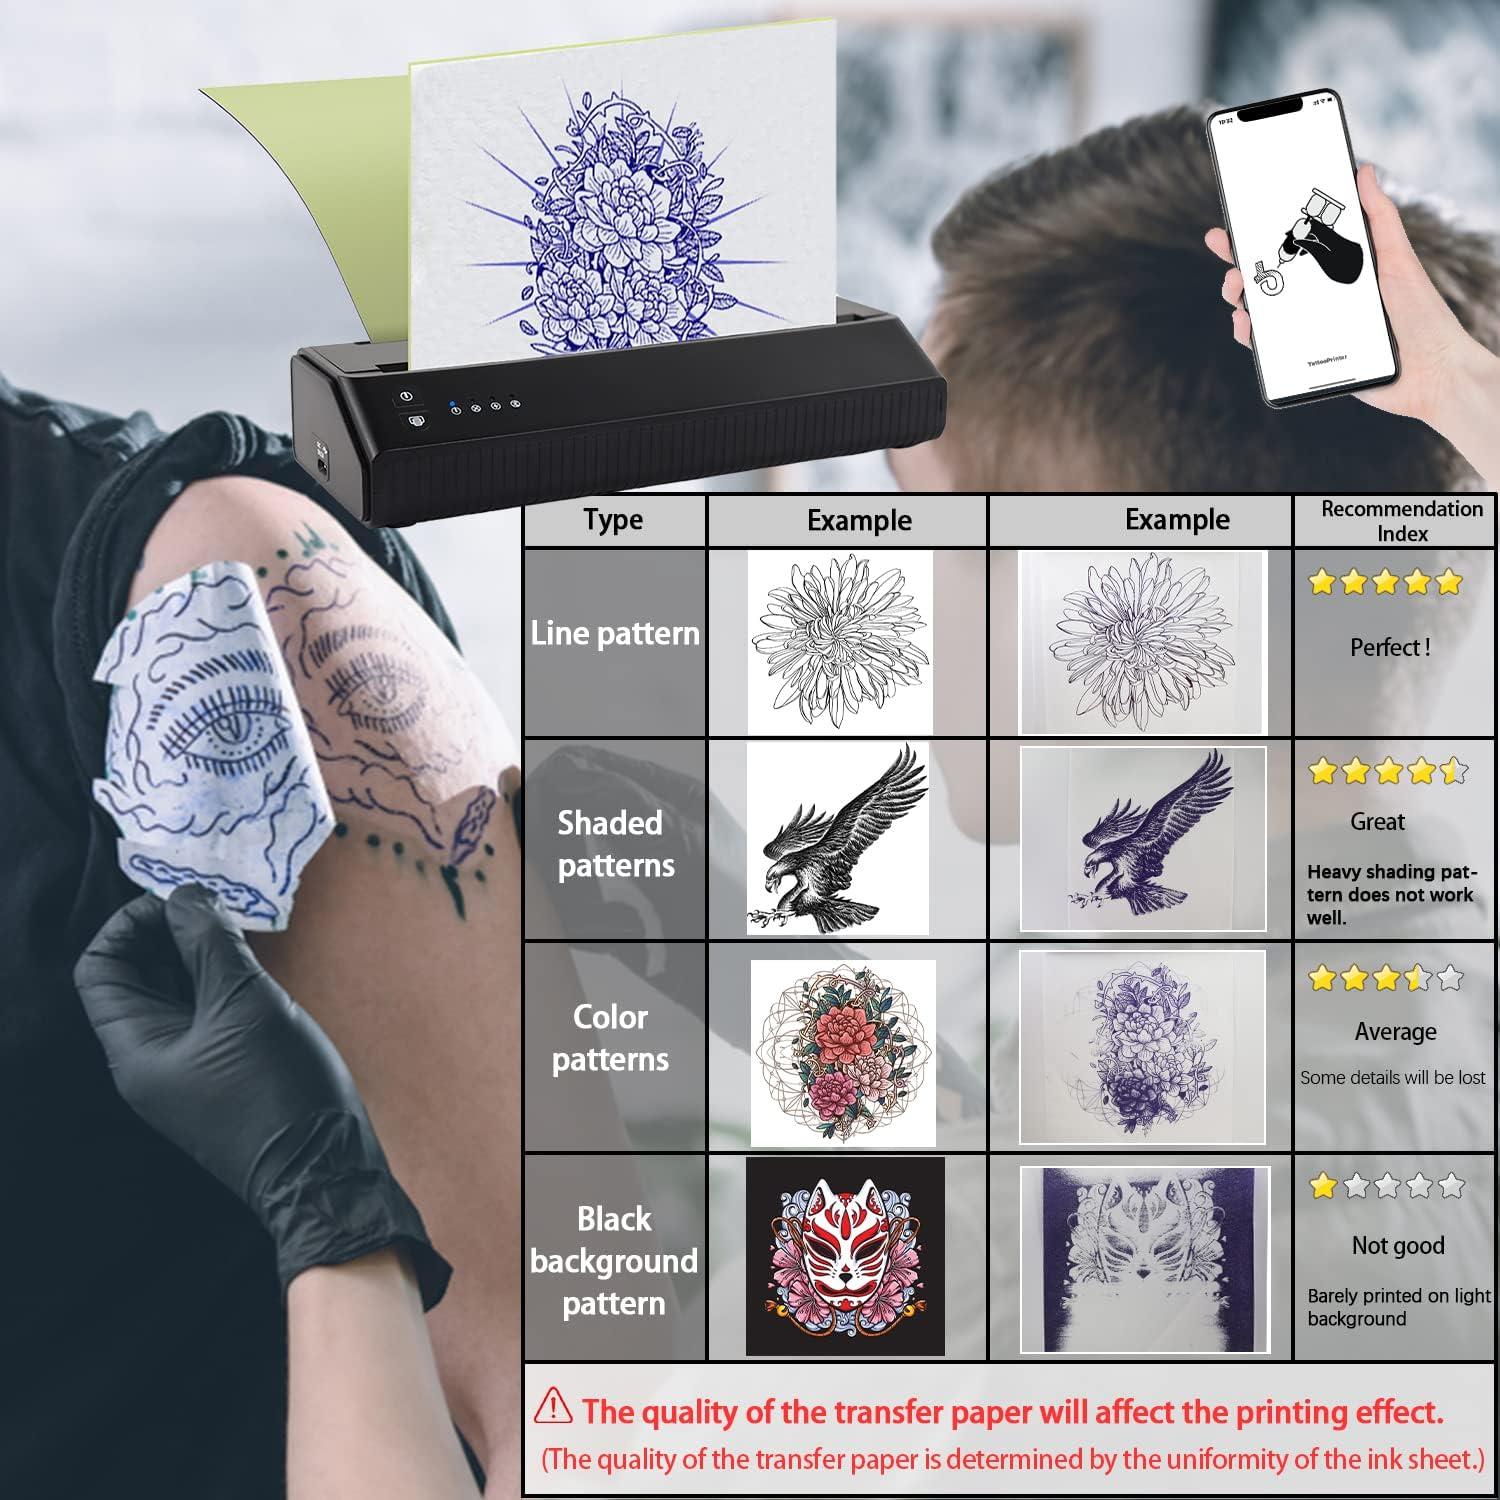 Cheap Cordless Tattoo Transfer Stencil Printer Portable Rechargeable Tattoo  Printer Tattoo Transfer